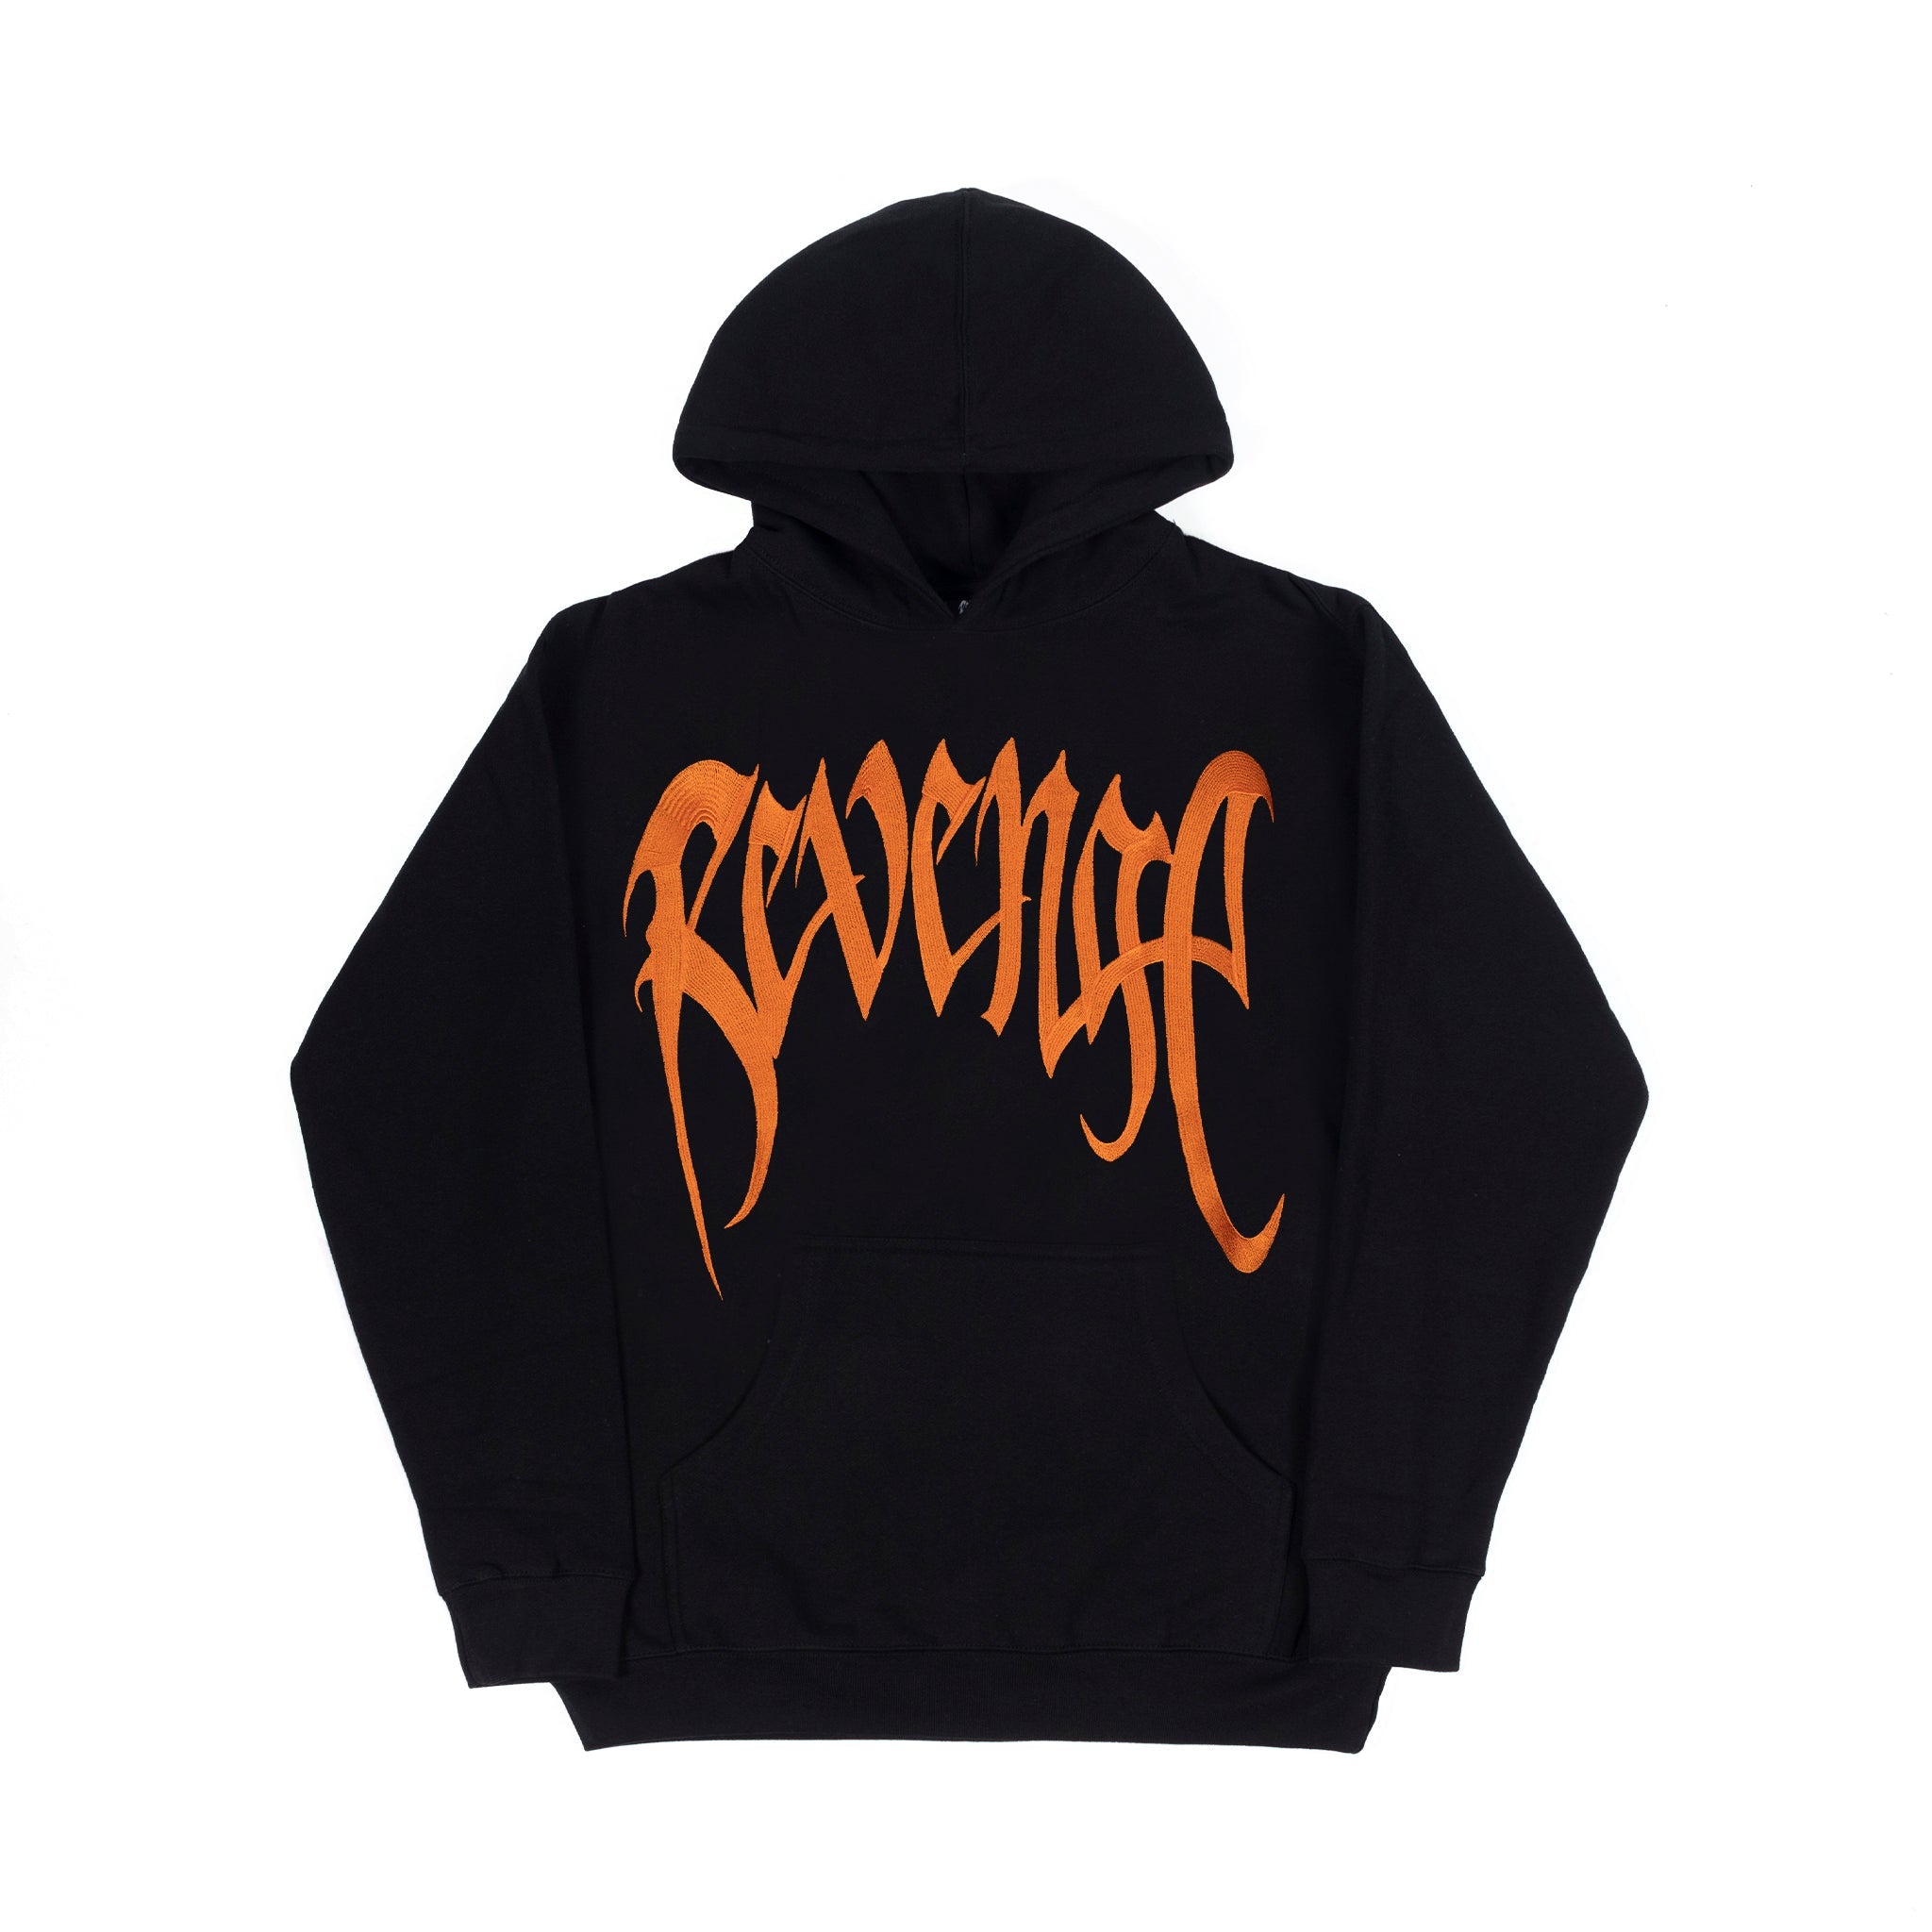 Revenge Embroidered Heavyweight Hoodie Black/Orange メンズ - FW22 - JP